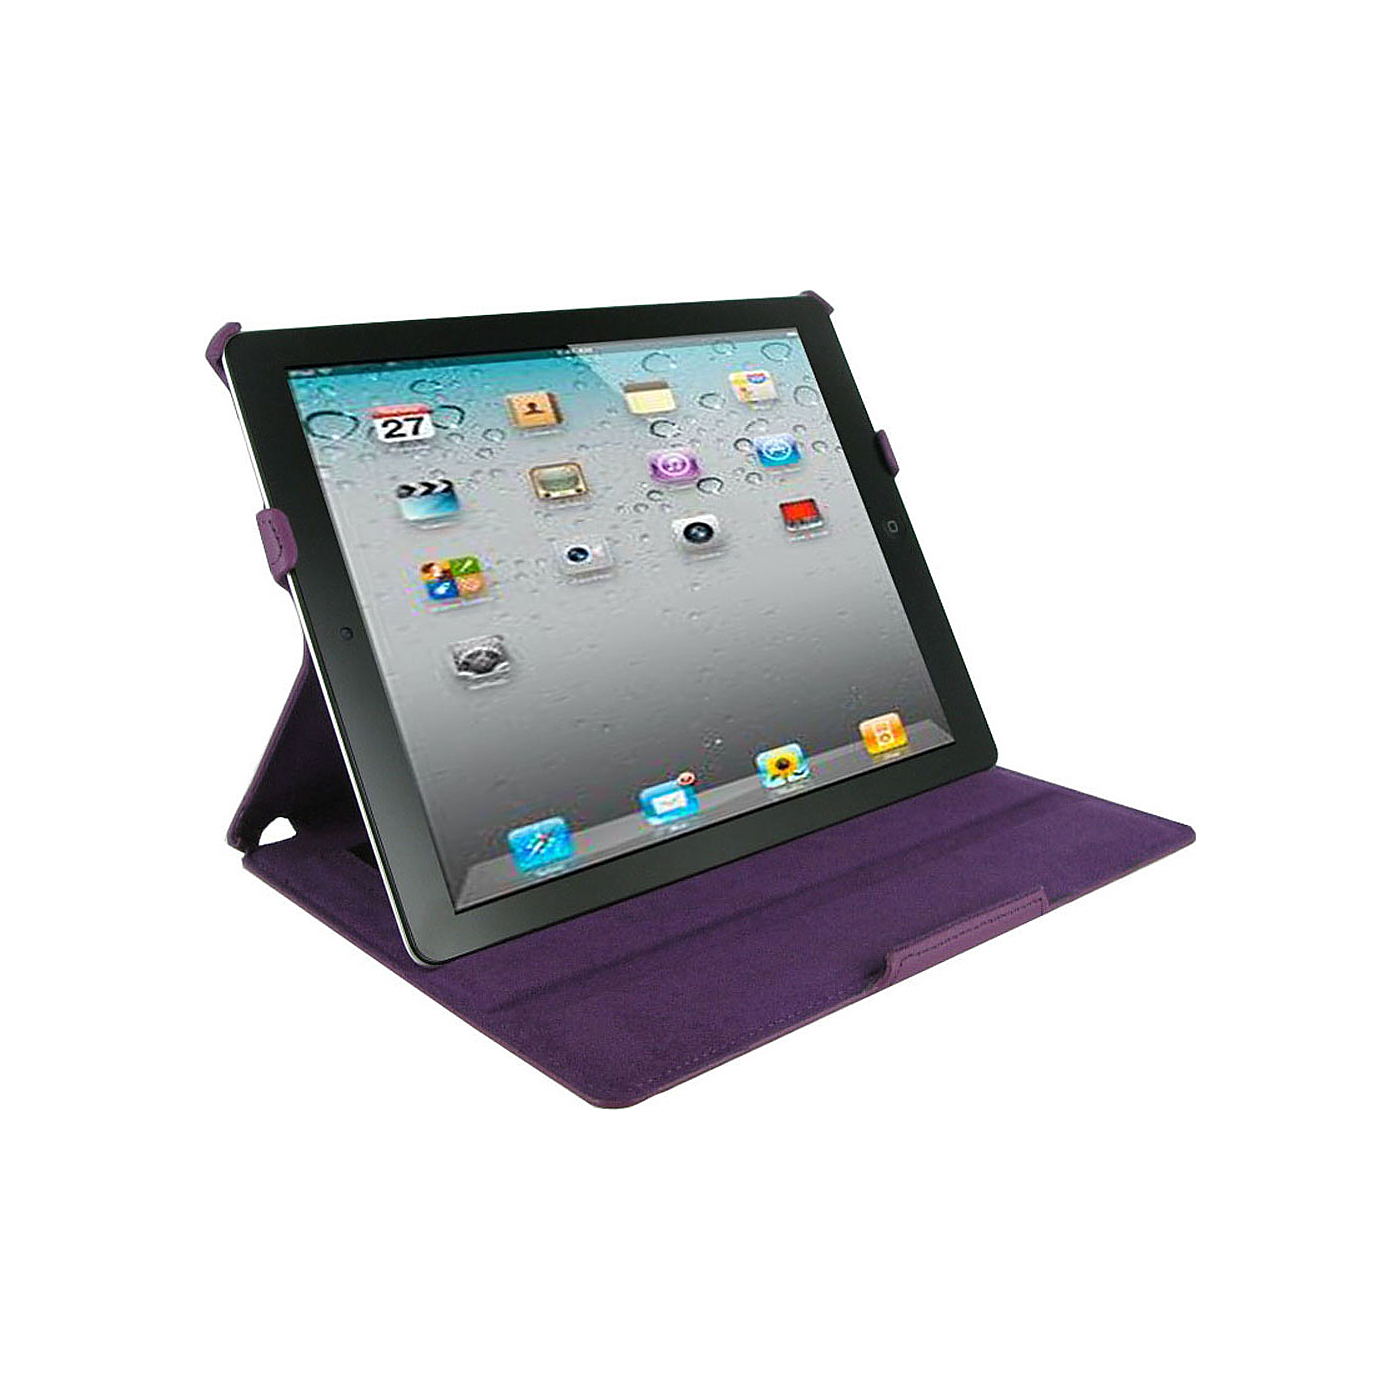 rooCASE Slim Fit Folio Case for Apple iPad 2 ¡ The New iPad 3